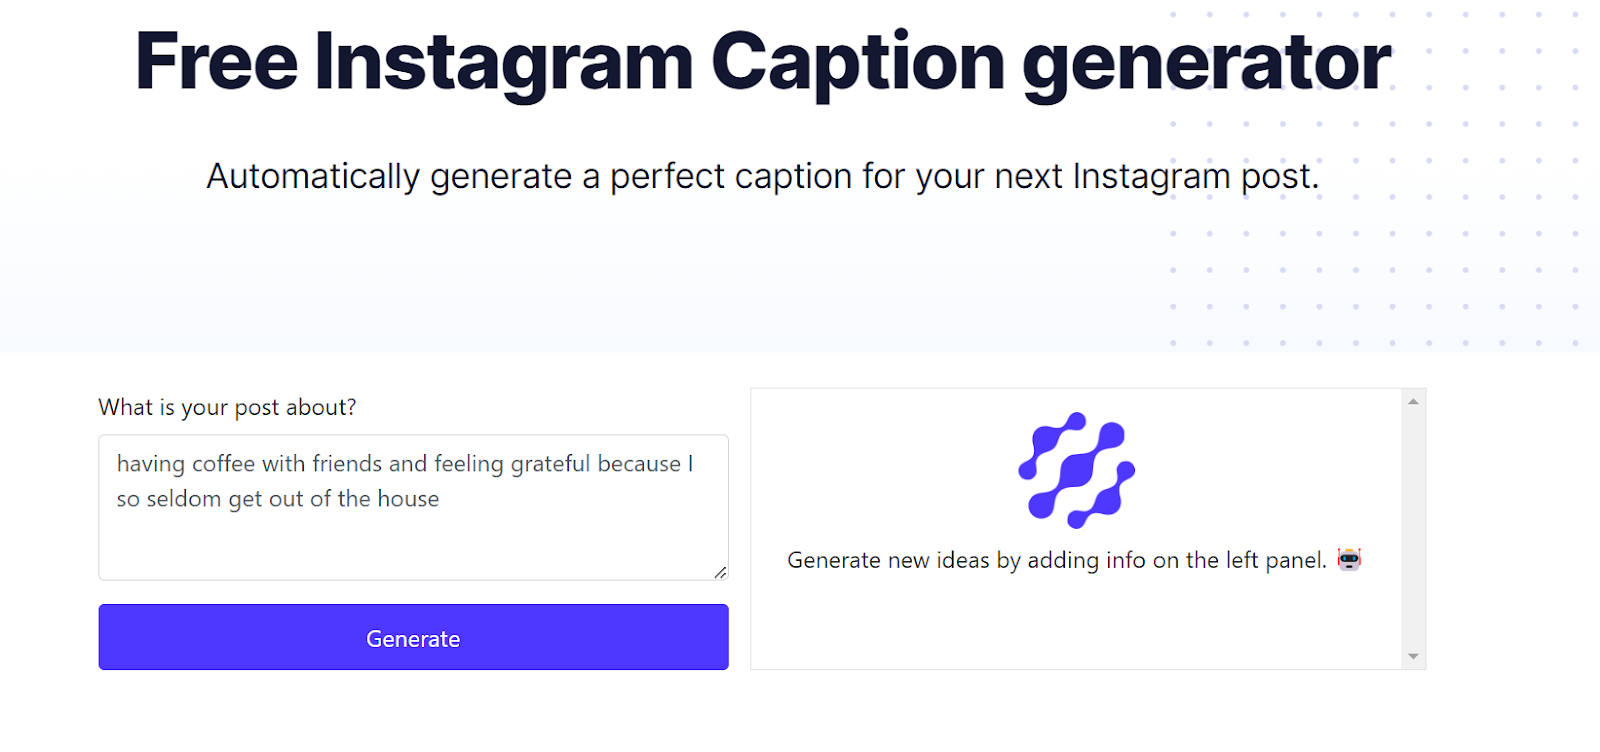 Free Instagram Caption Generator by NeuralText